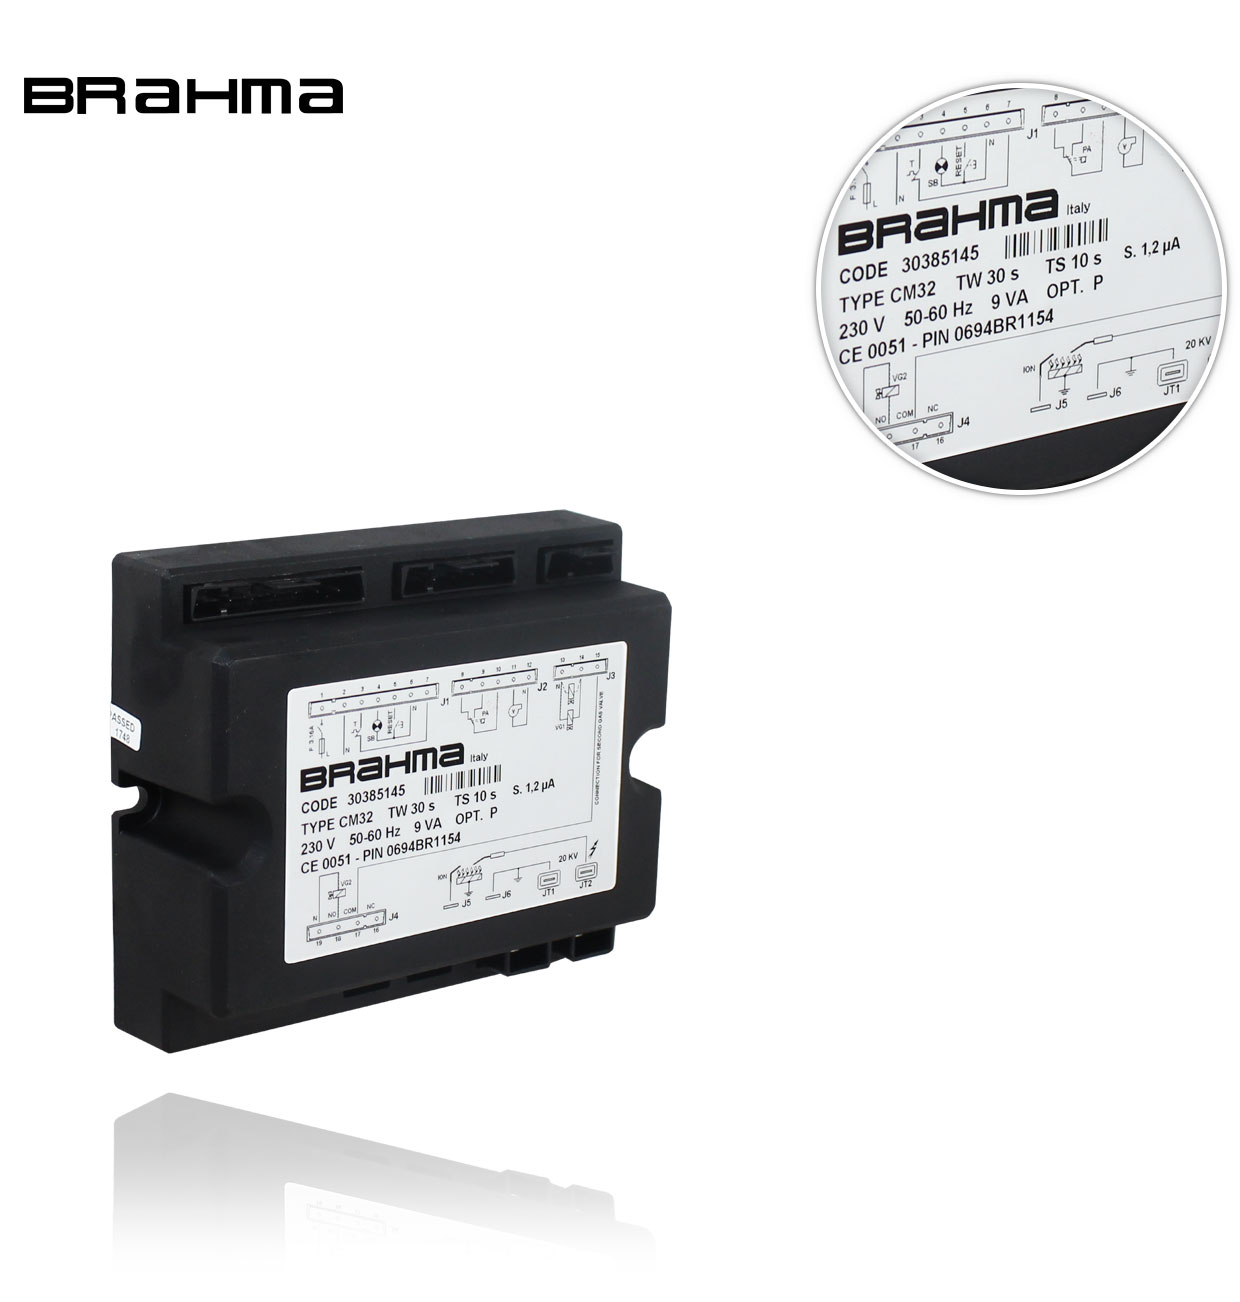 CM 32  TW30 TS10 GAS EUROFLAT BRAHMA CONTROL BOX